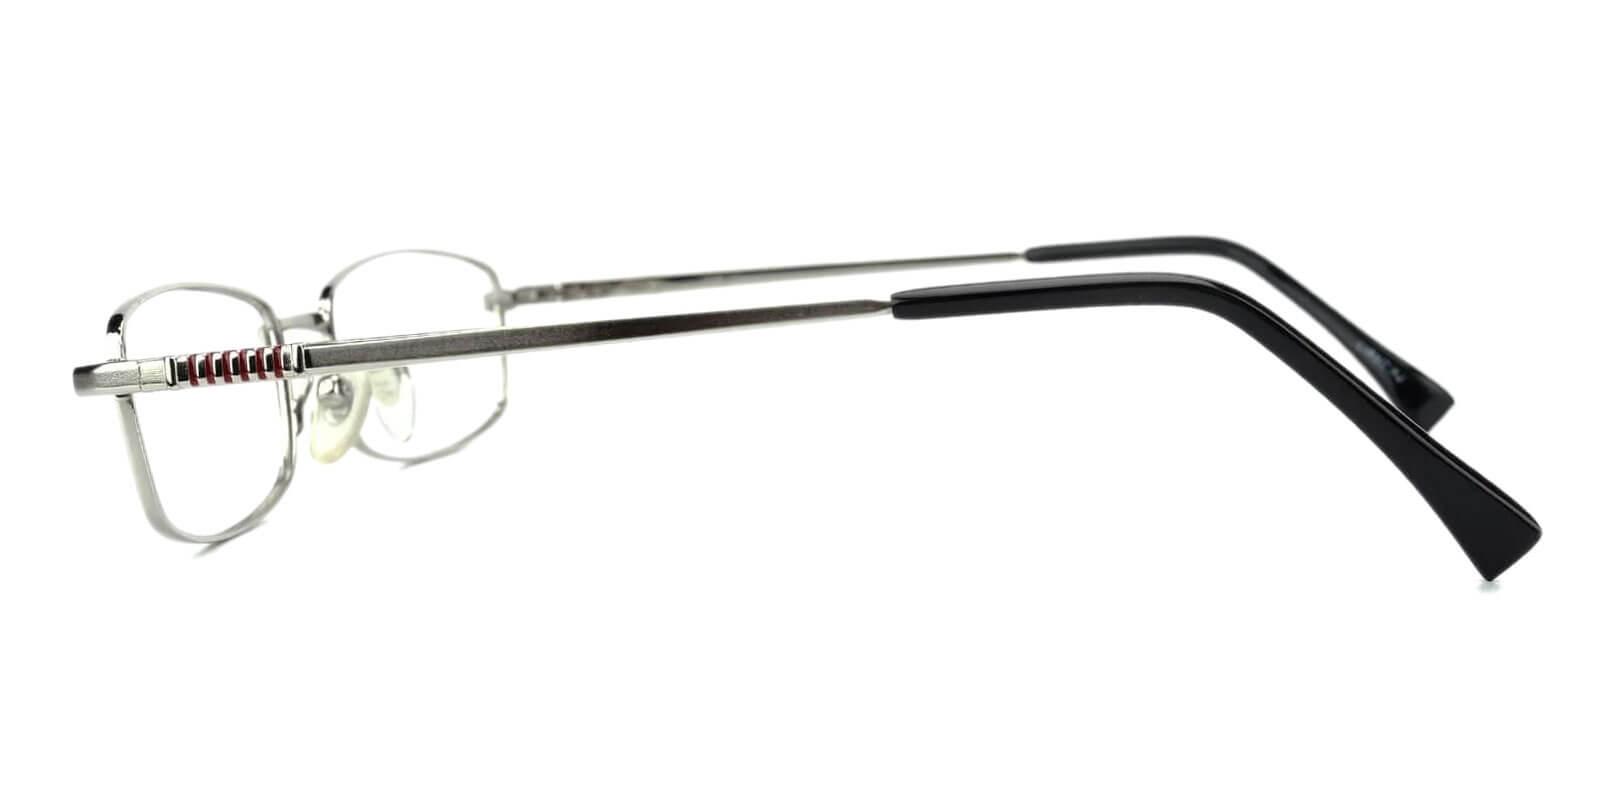 Gihon Silver Metal Eyeglasses , NosePads Frames from ABBE Glasses